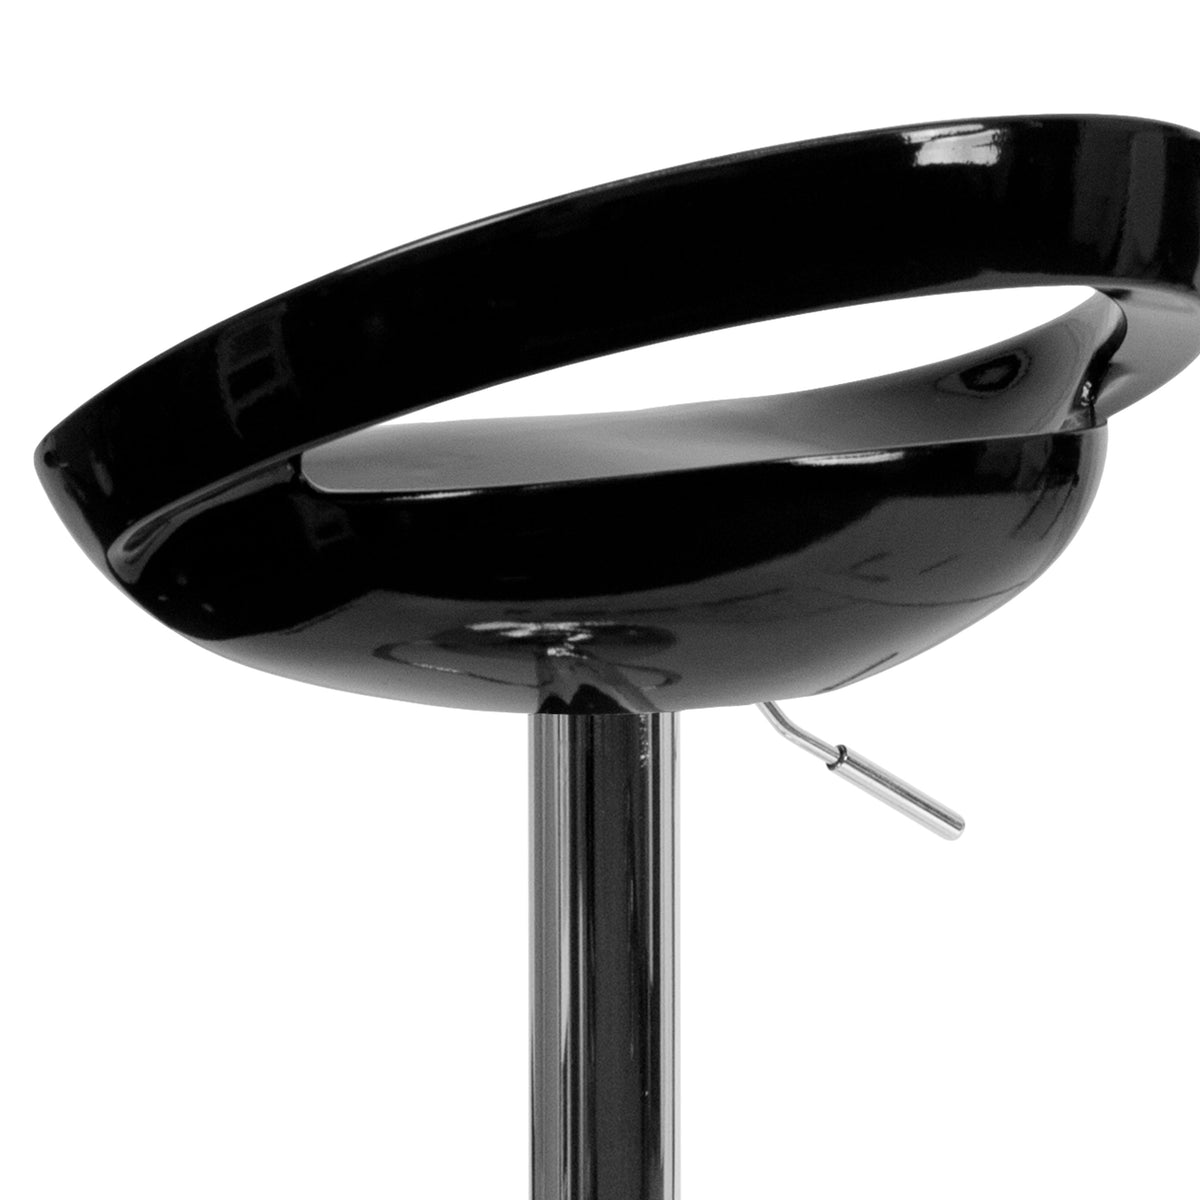 Black |#| Black Plastic Adjustable Height Barstool with Rounded Cutout Back & Chrome Base